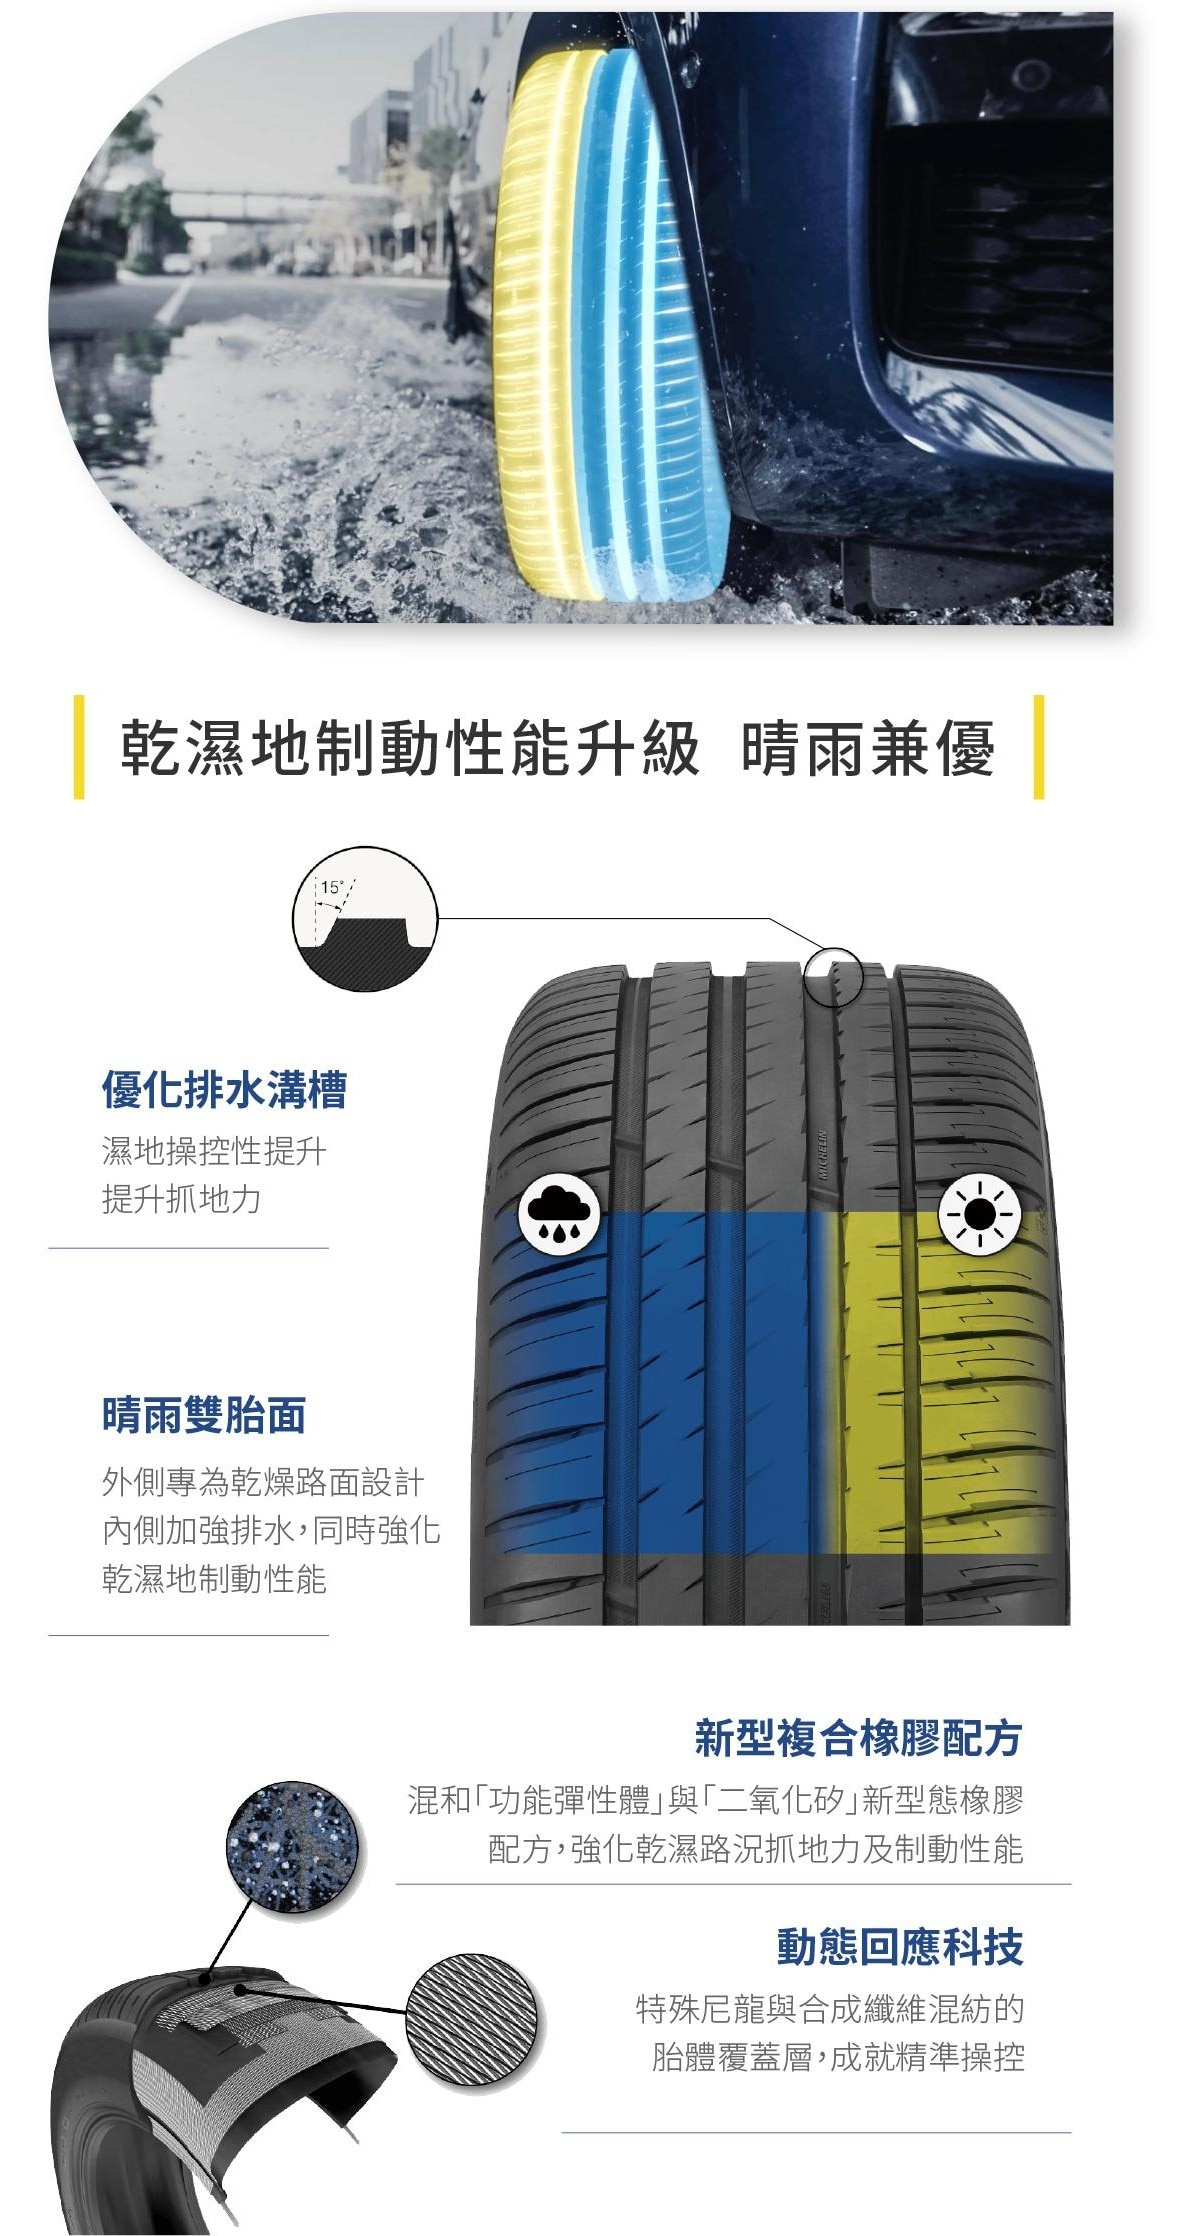 Michelin PILOTSPORT4SUV 擁有優化的排水溝槽、晴雨雙胎面、新型複合橡膠配方、動態回應科技，使其乾濕地制動性能升級。